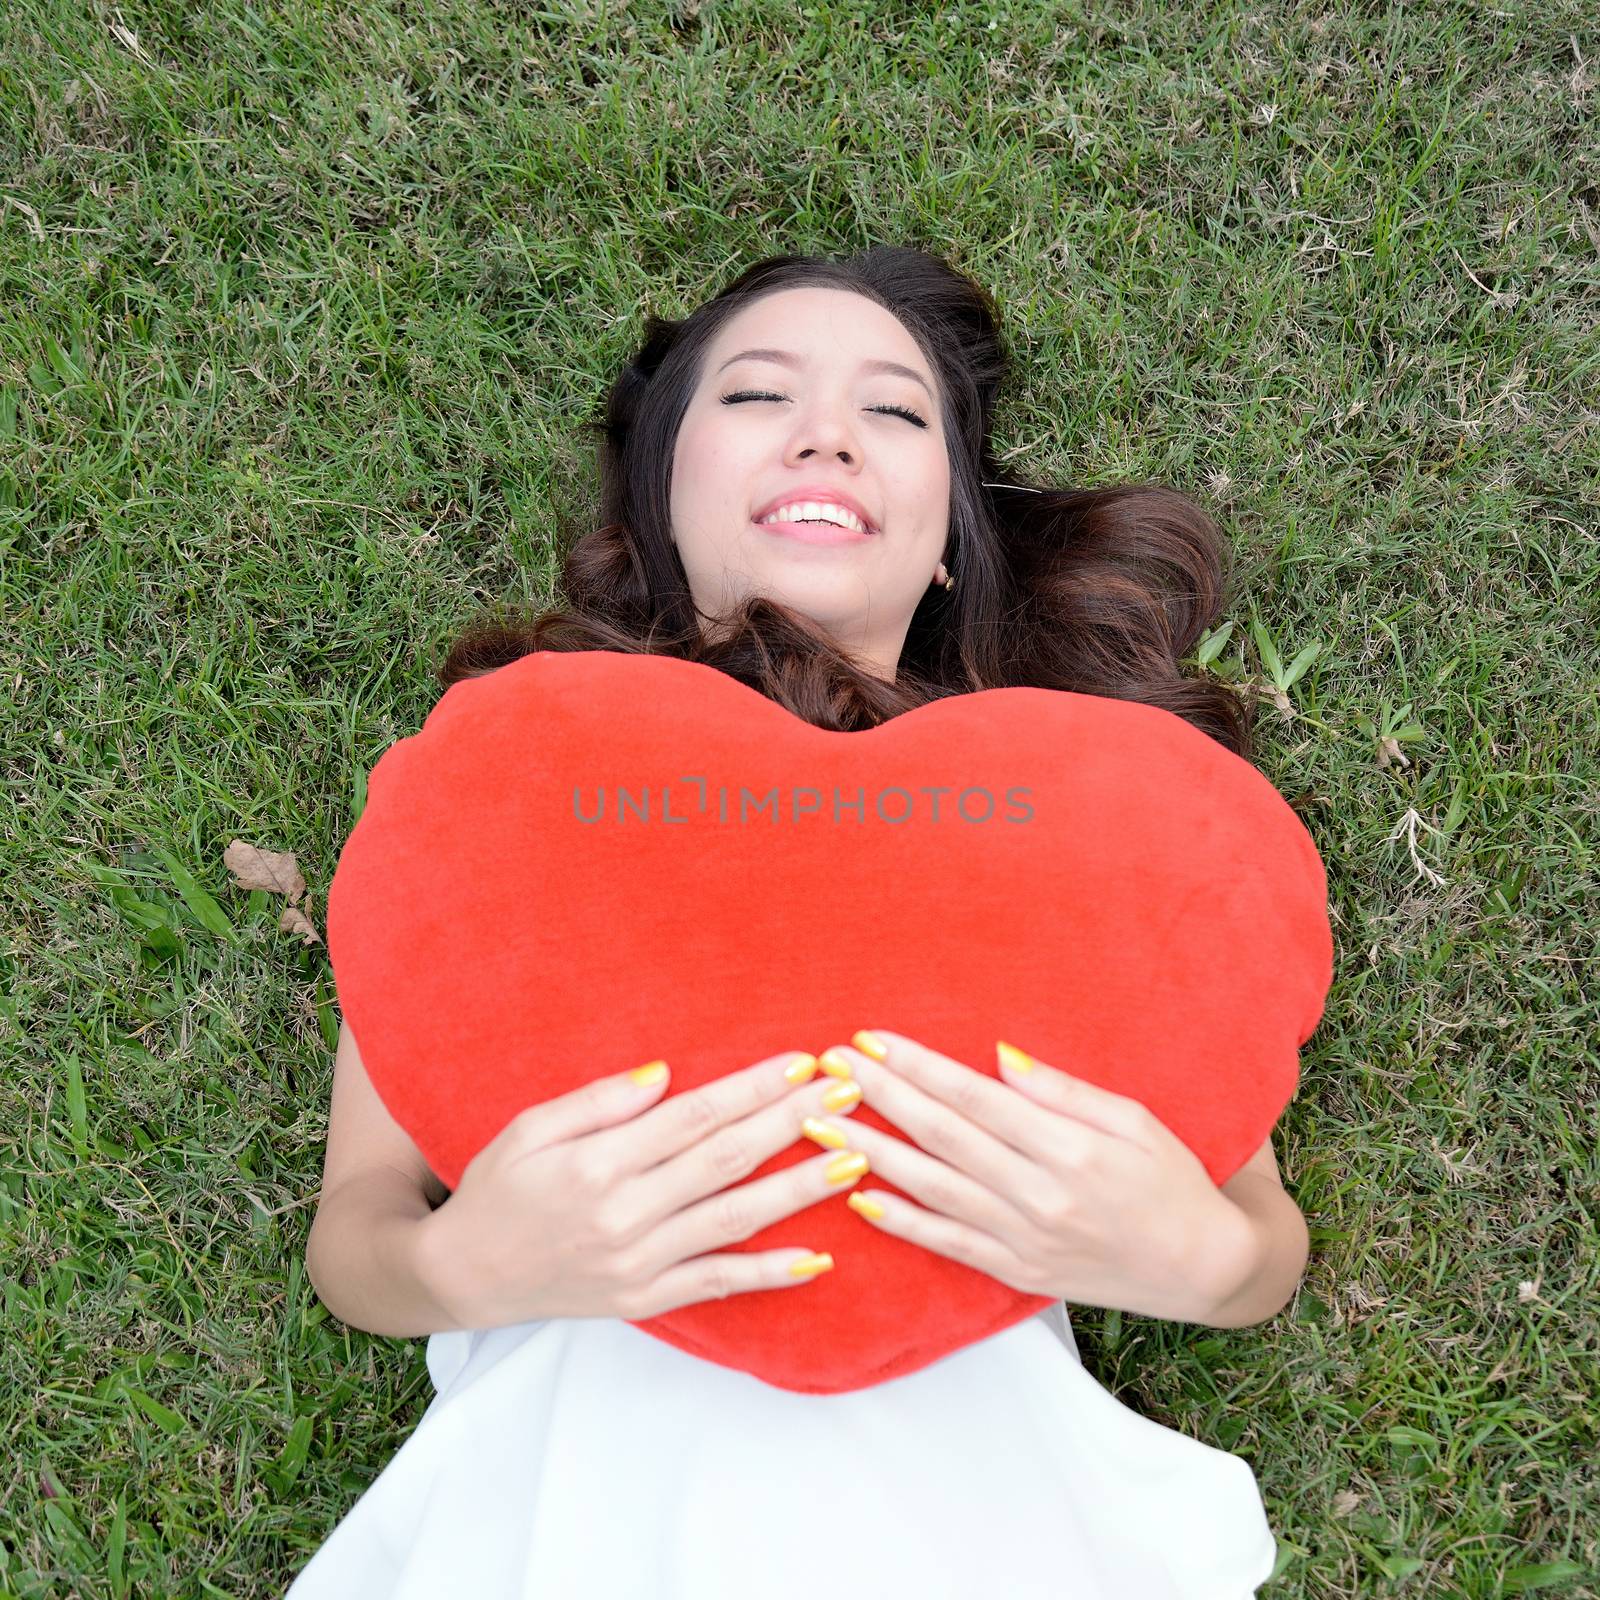 Women holding big love heart shape pillow on green grass by jakgree